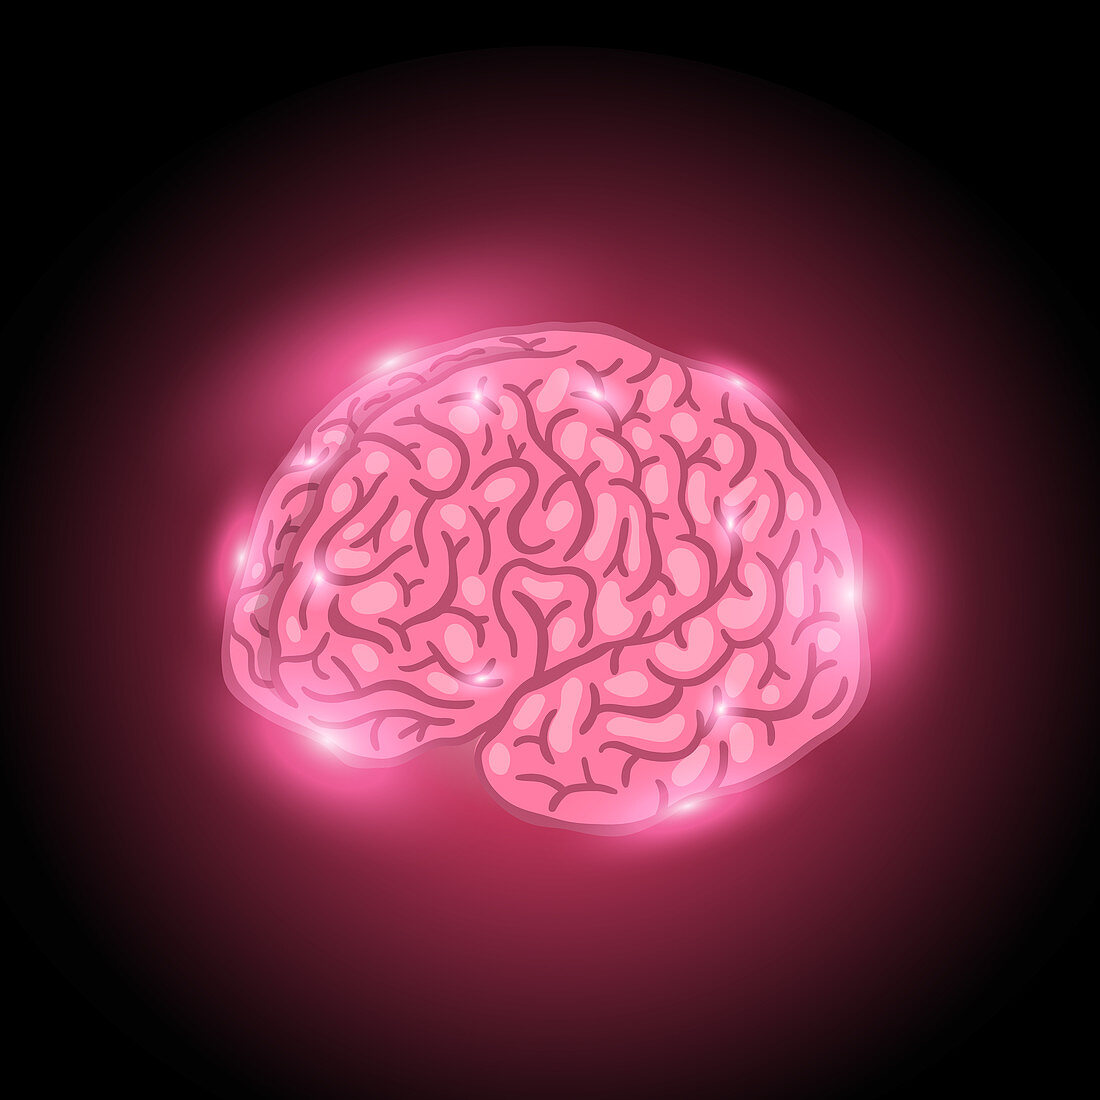 Glowing brain, illustration